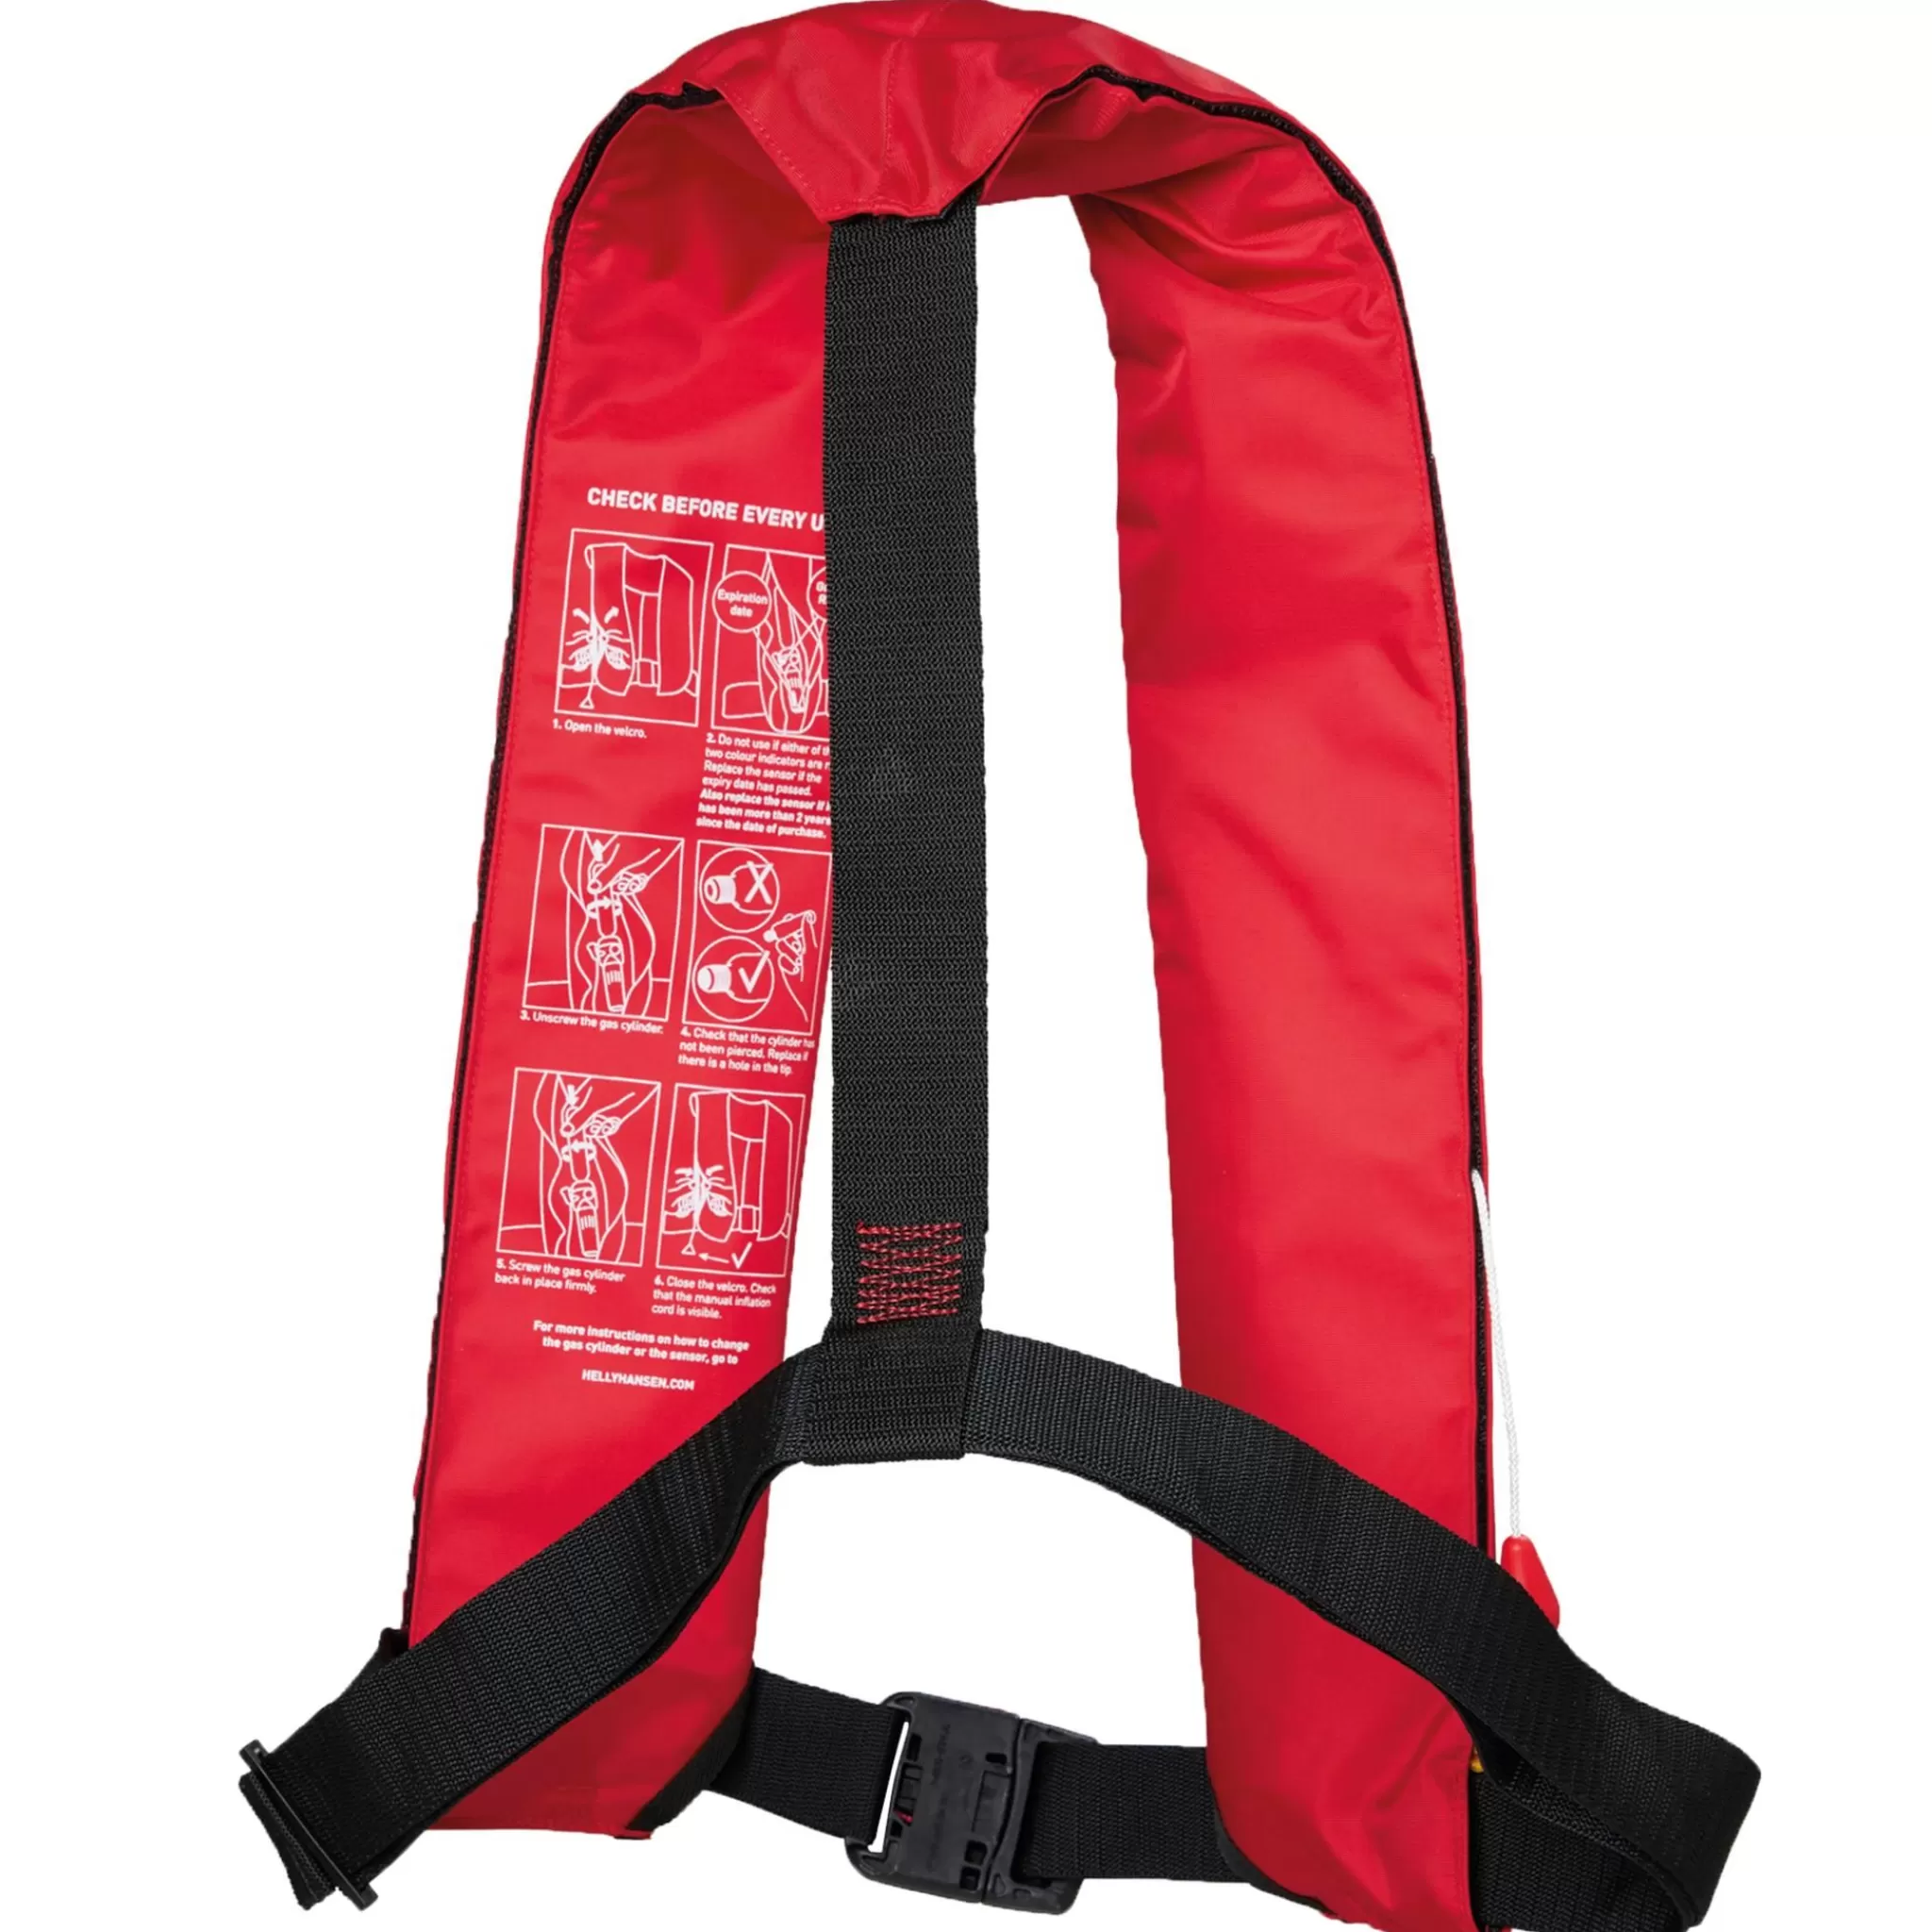 Best Sale Helly Hansen Sport Inflatable Lifejacket, Redningsvest Unisex